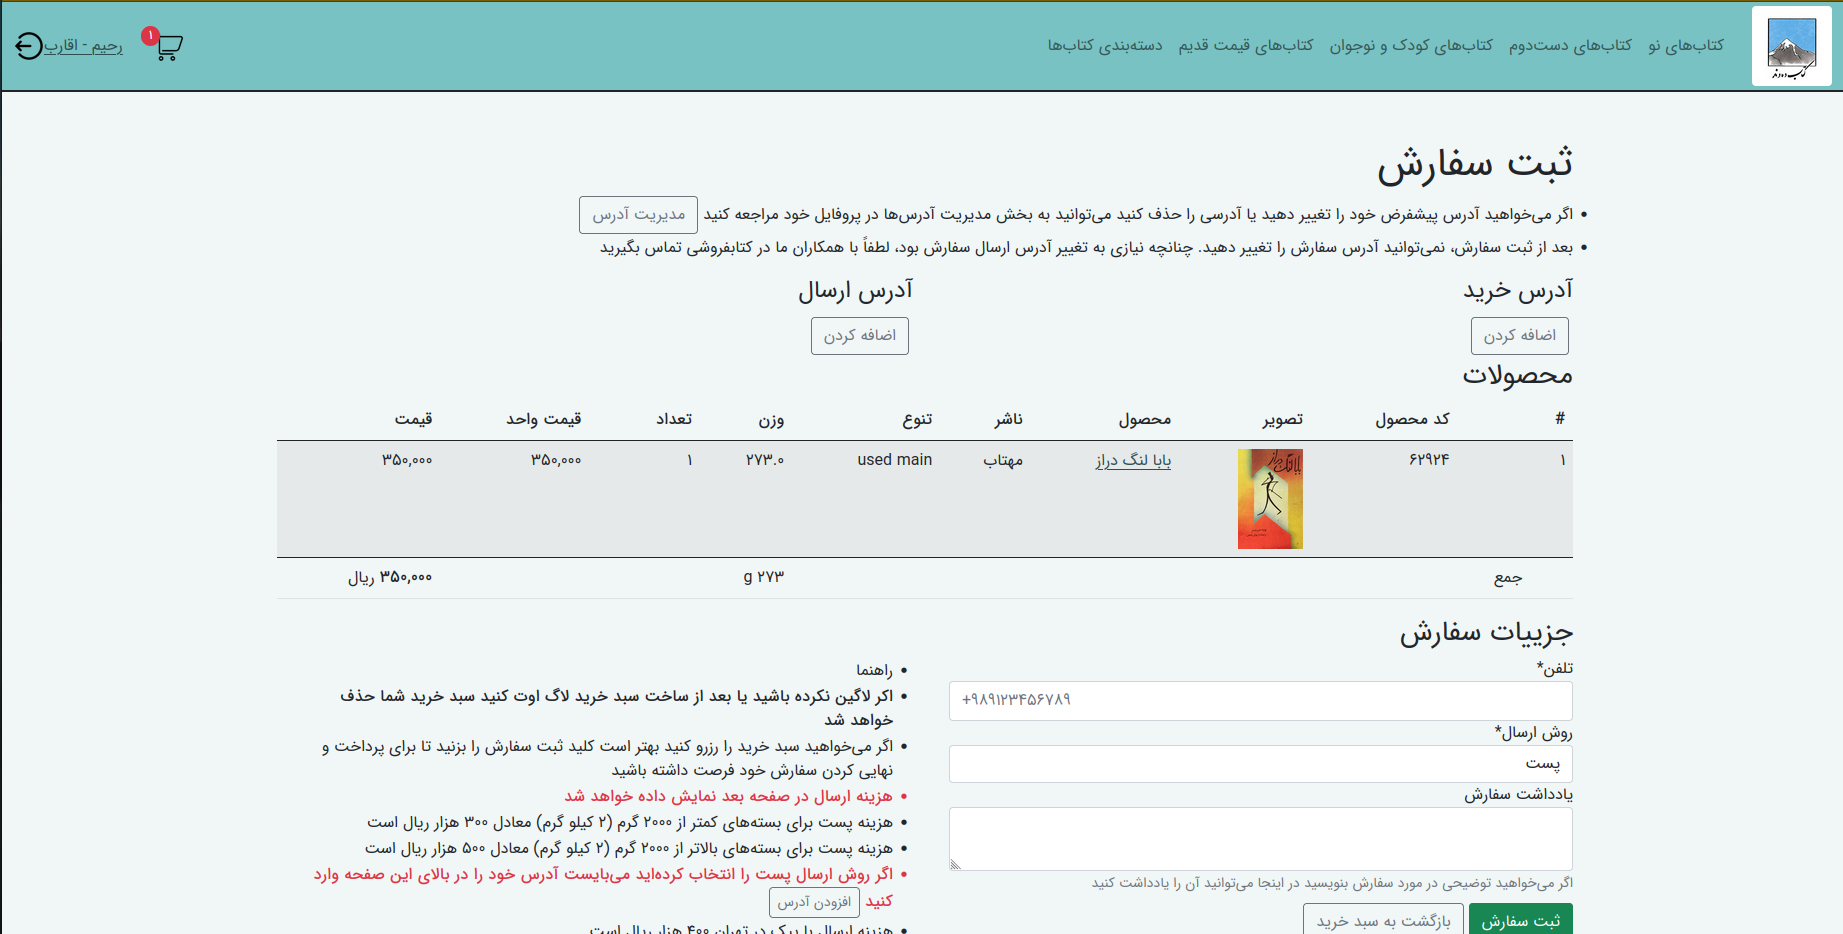 online shop screenshot of bookstore software ketabe damavand